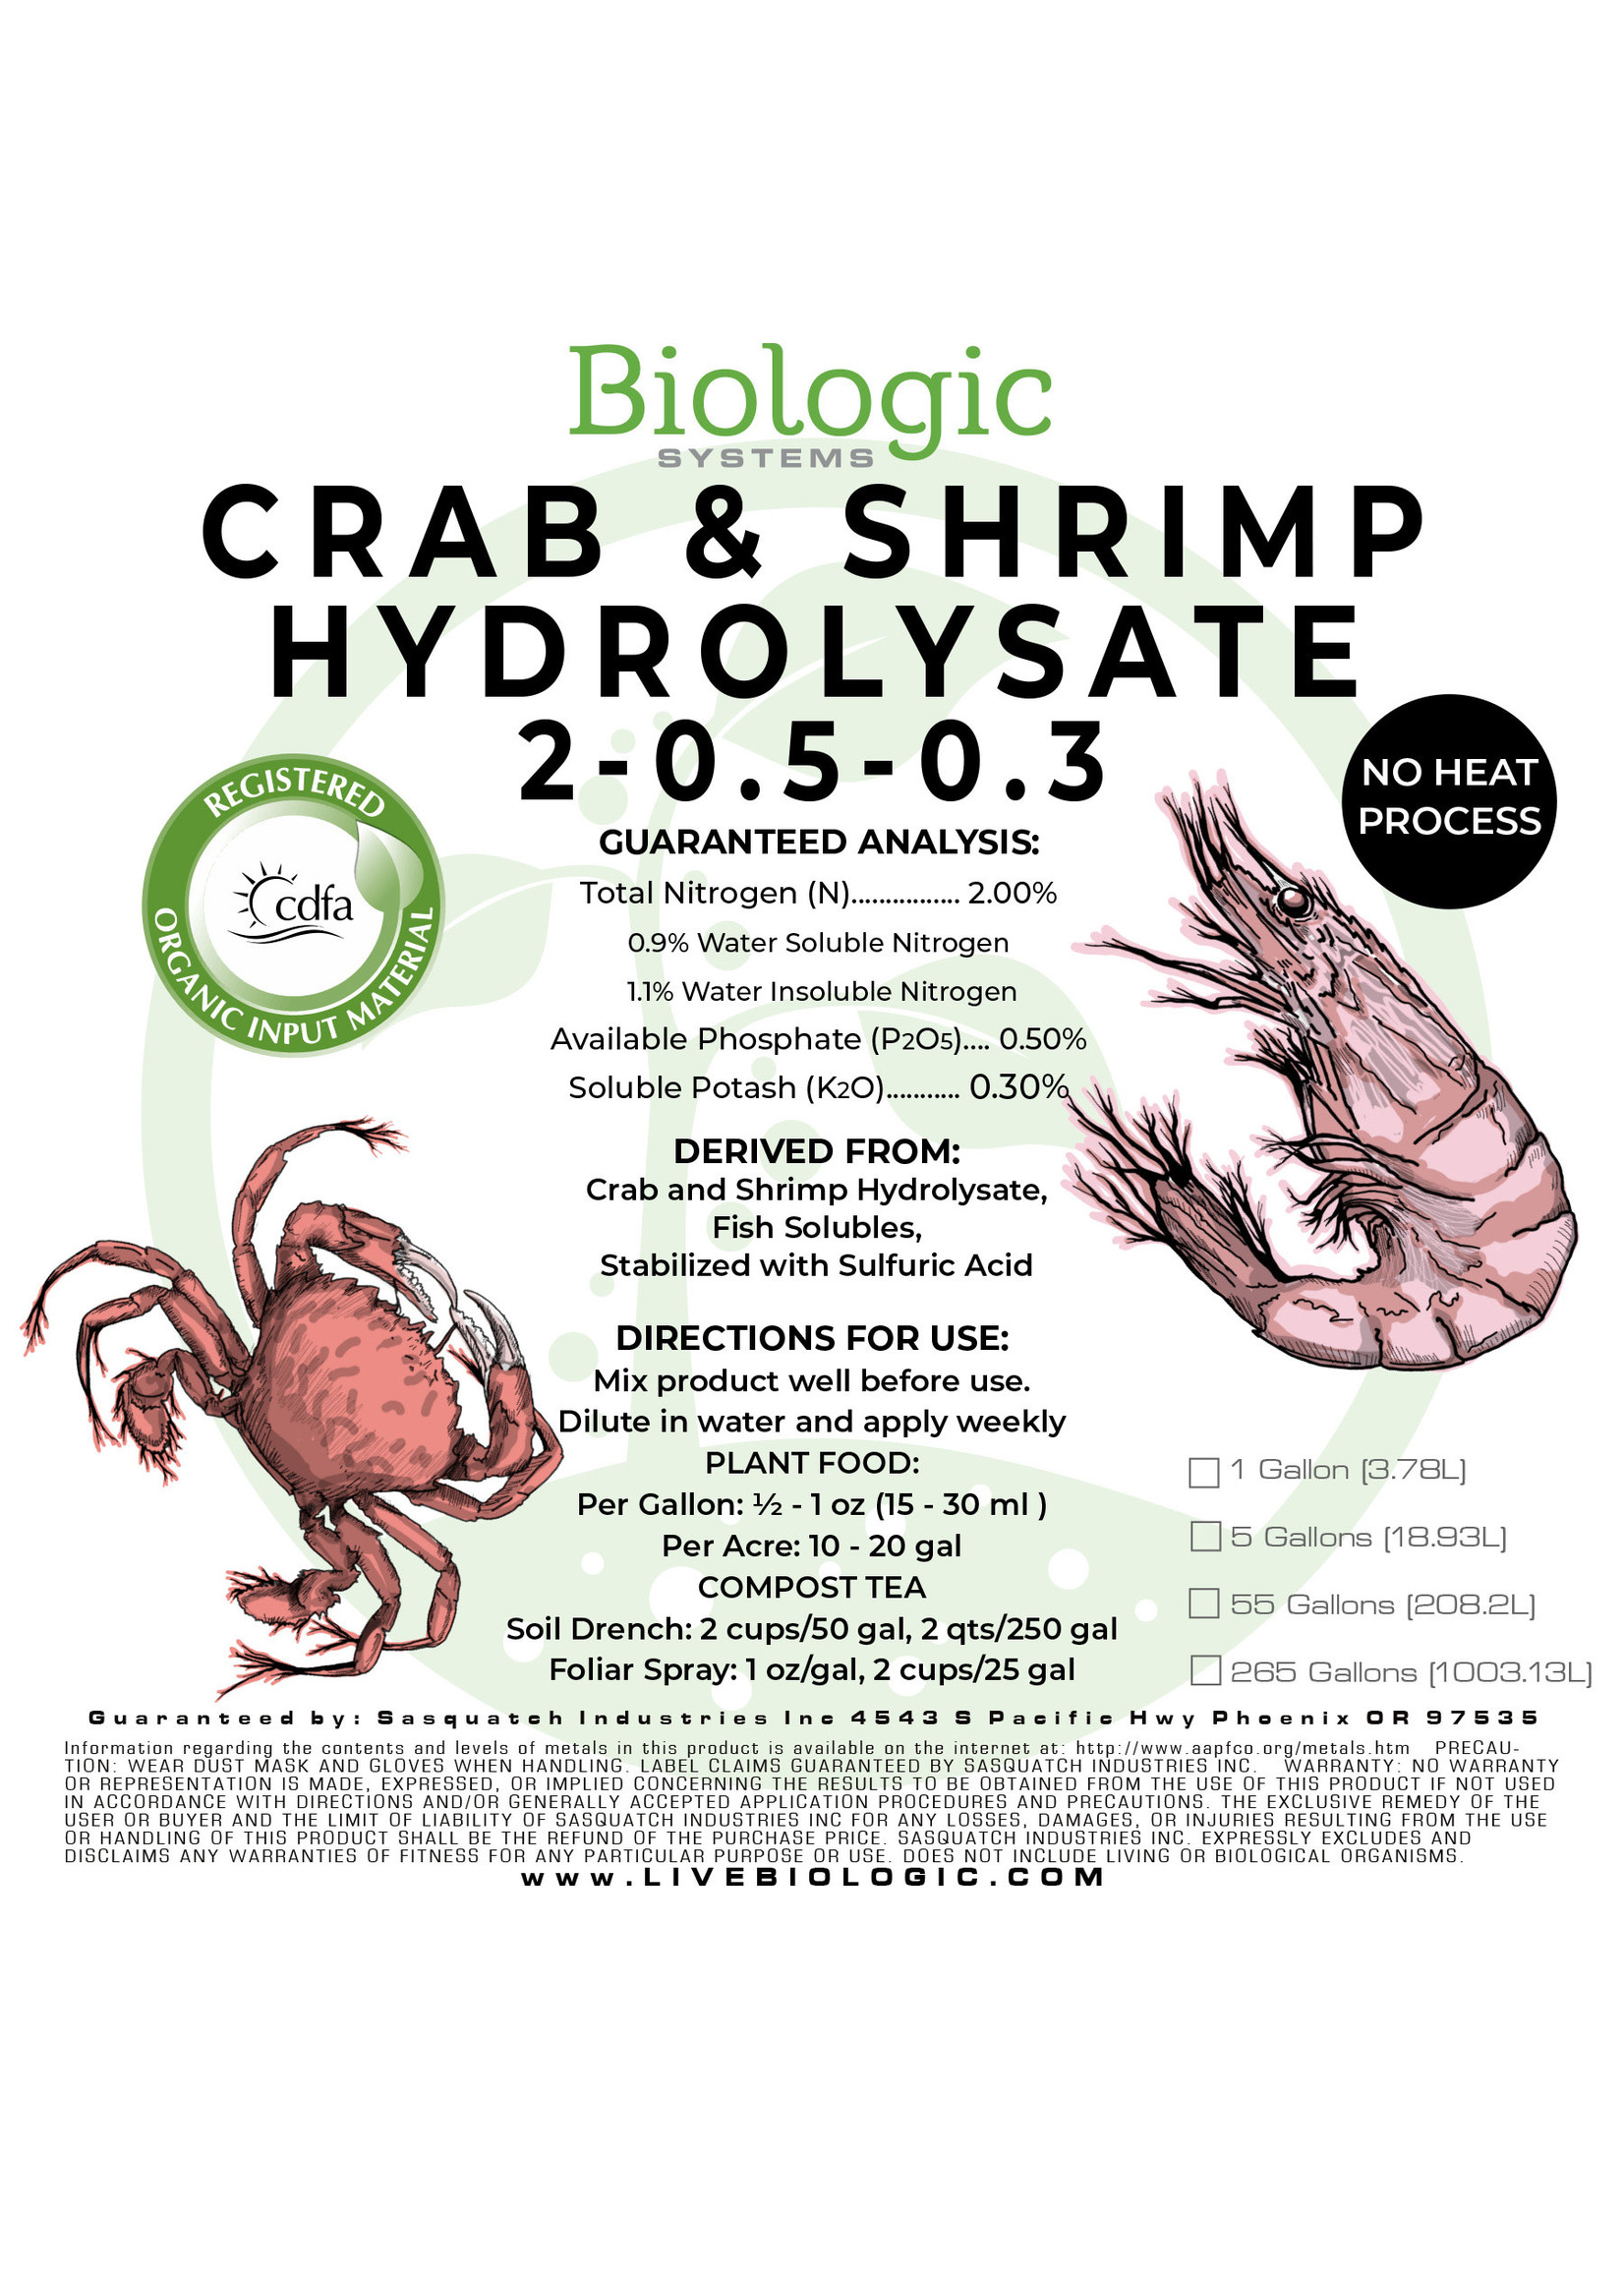 biologic-systems-crab-shrimp-hydrolysate.jpg